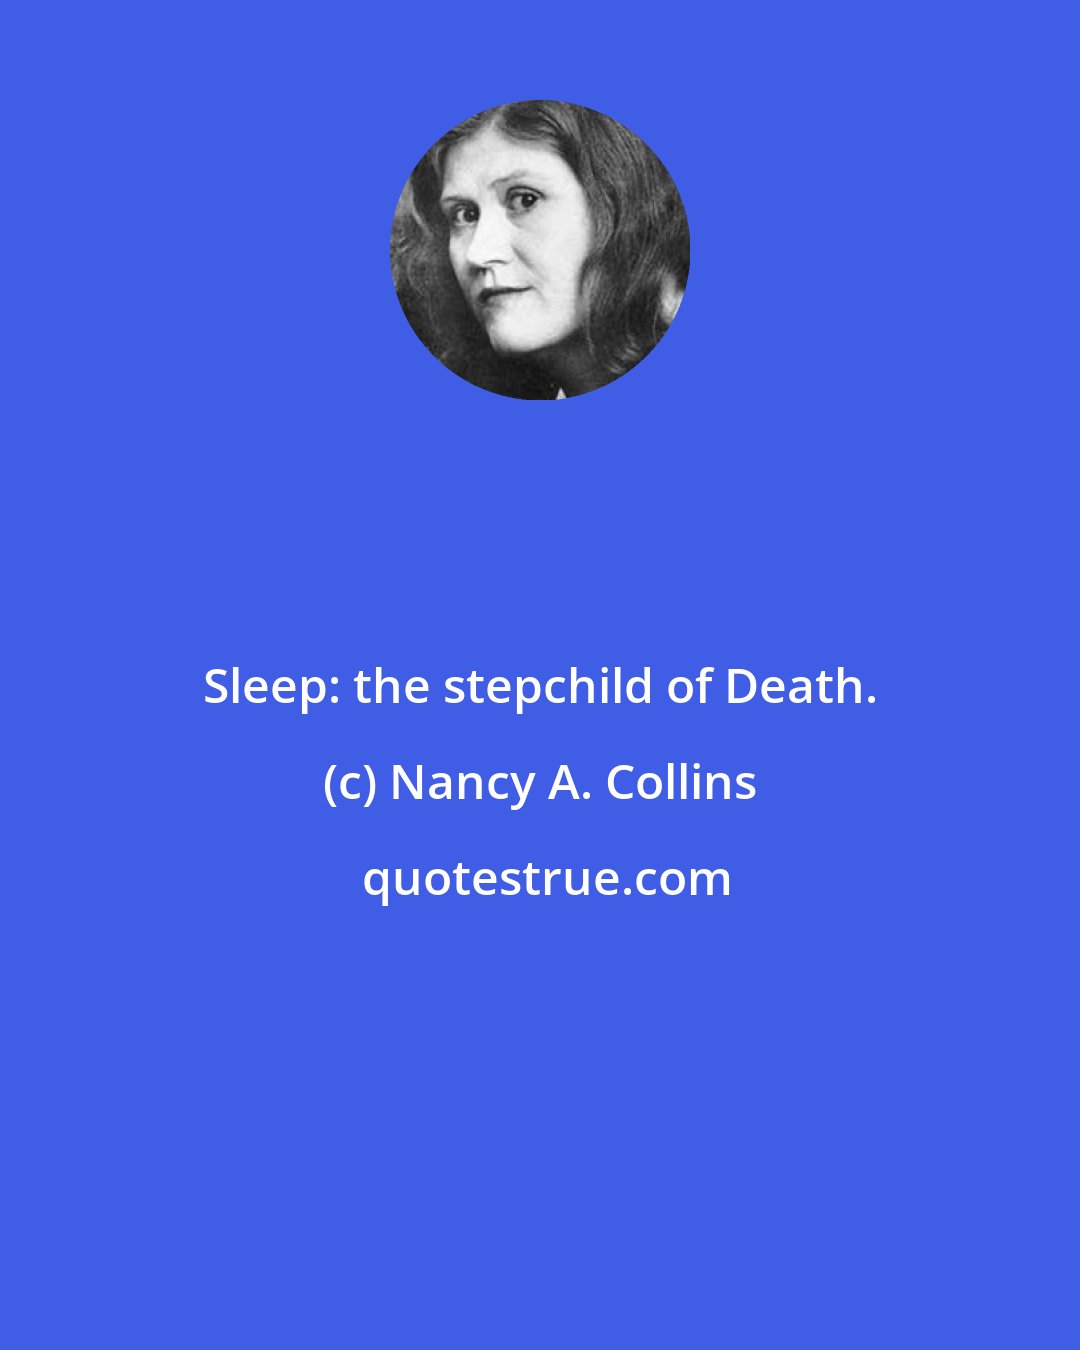 Nancy A. Collins: Sleep: the stepchild of Death.